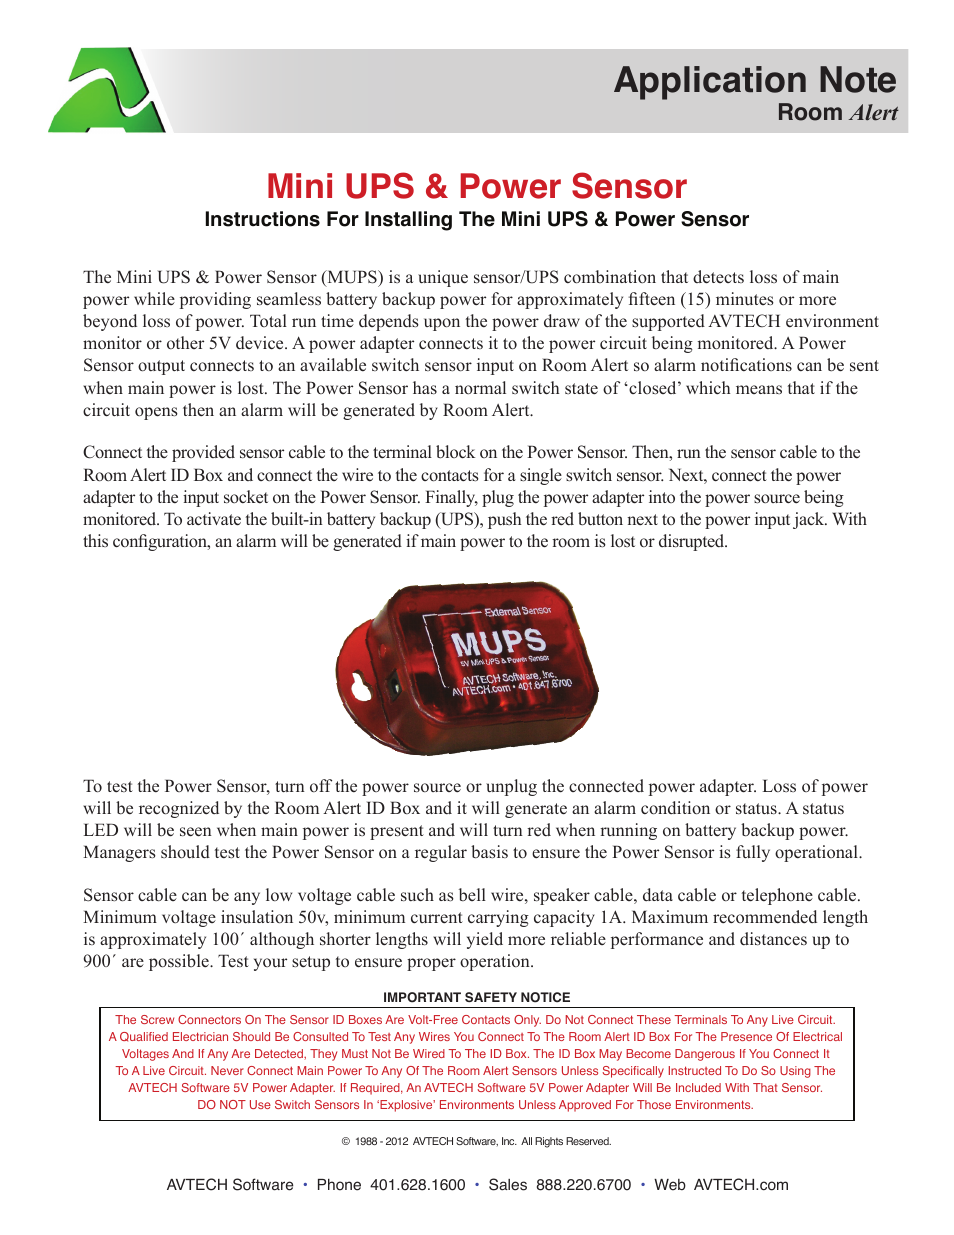 Mini UPS & Power Sensor (RMA-MUPS-SEN)